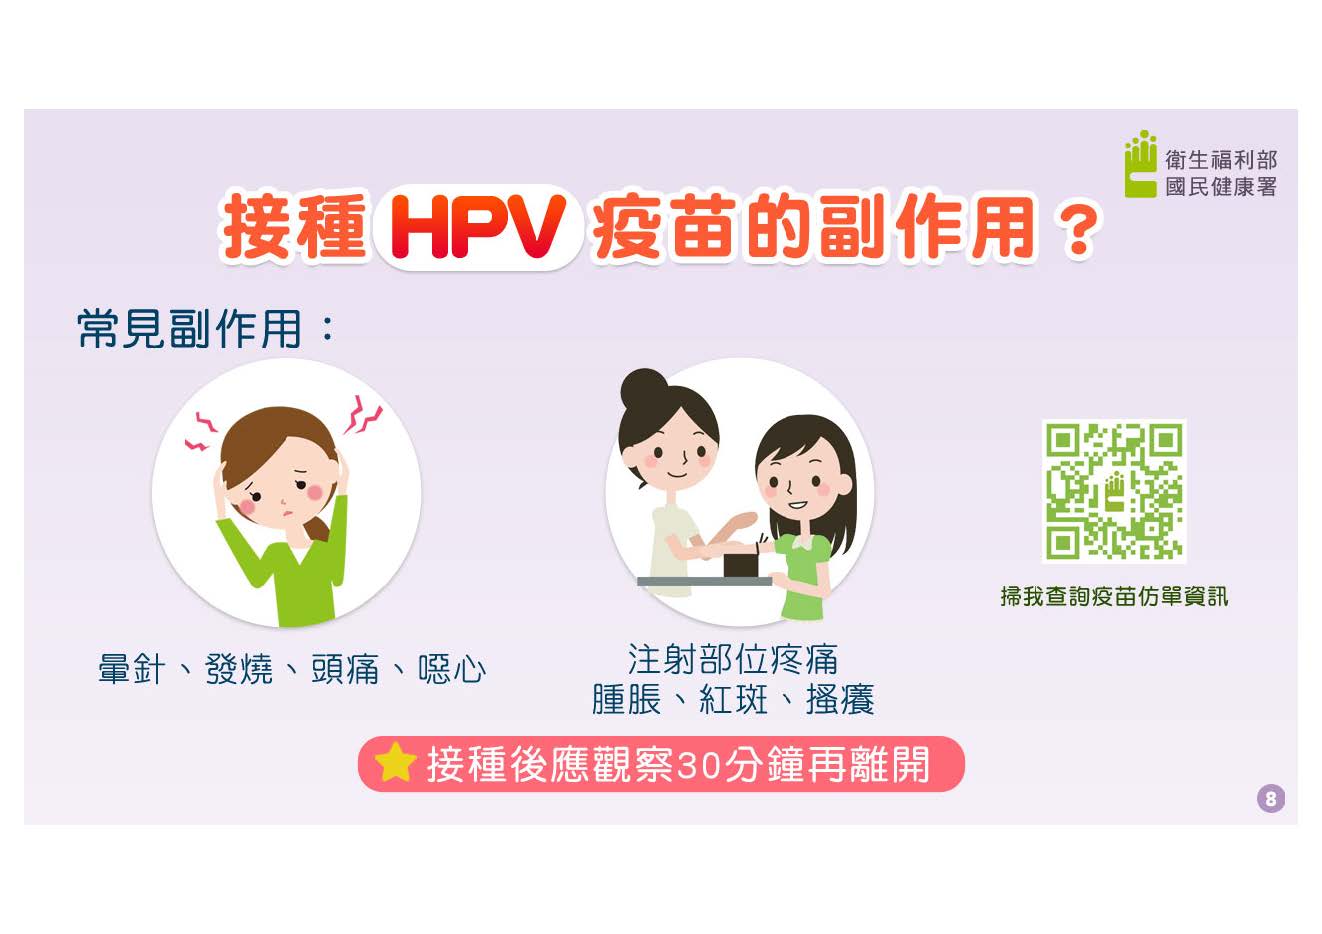 32.HPV疫苗可預防子宮頸癌